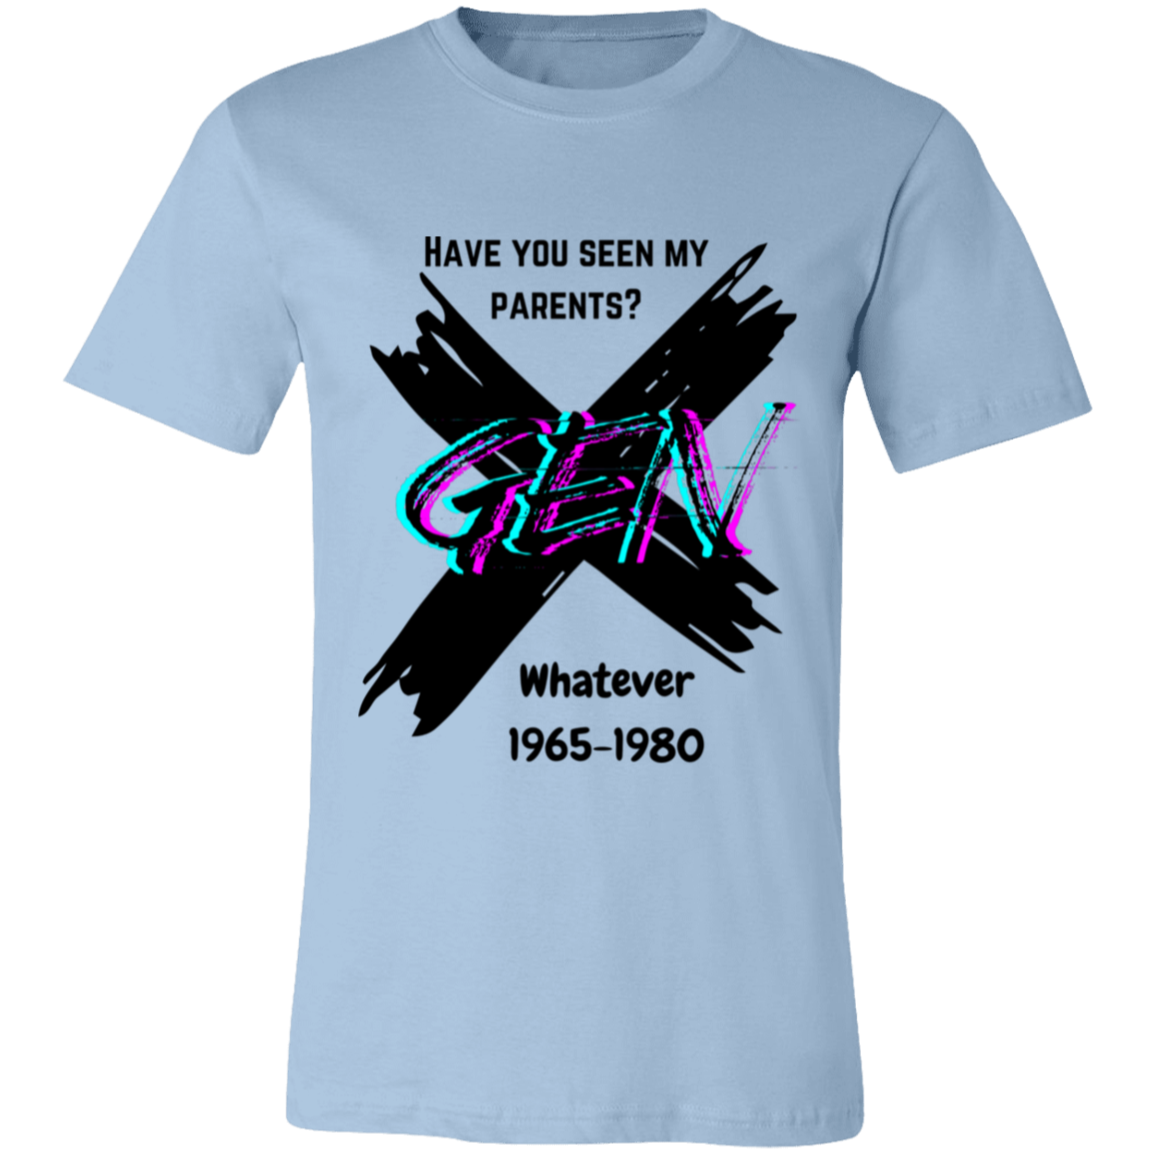 GEN X- Have you seen my parents? Unisex Jersey T-Shirt